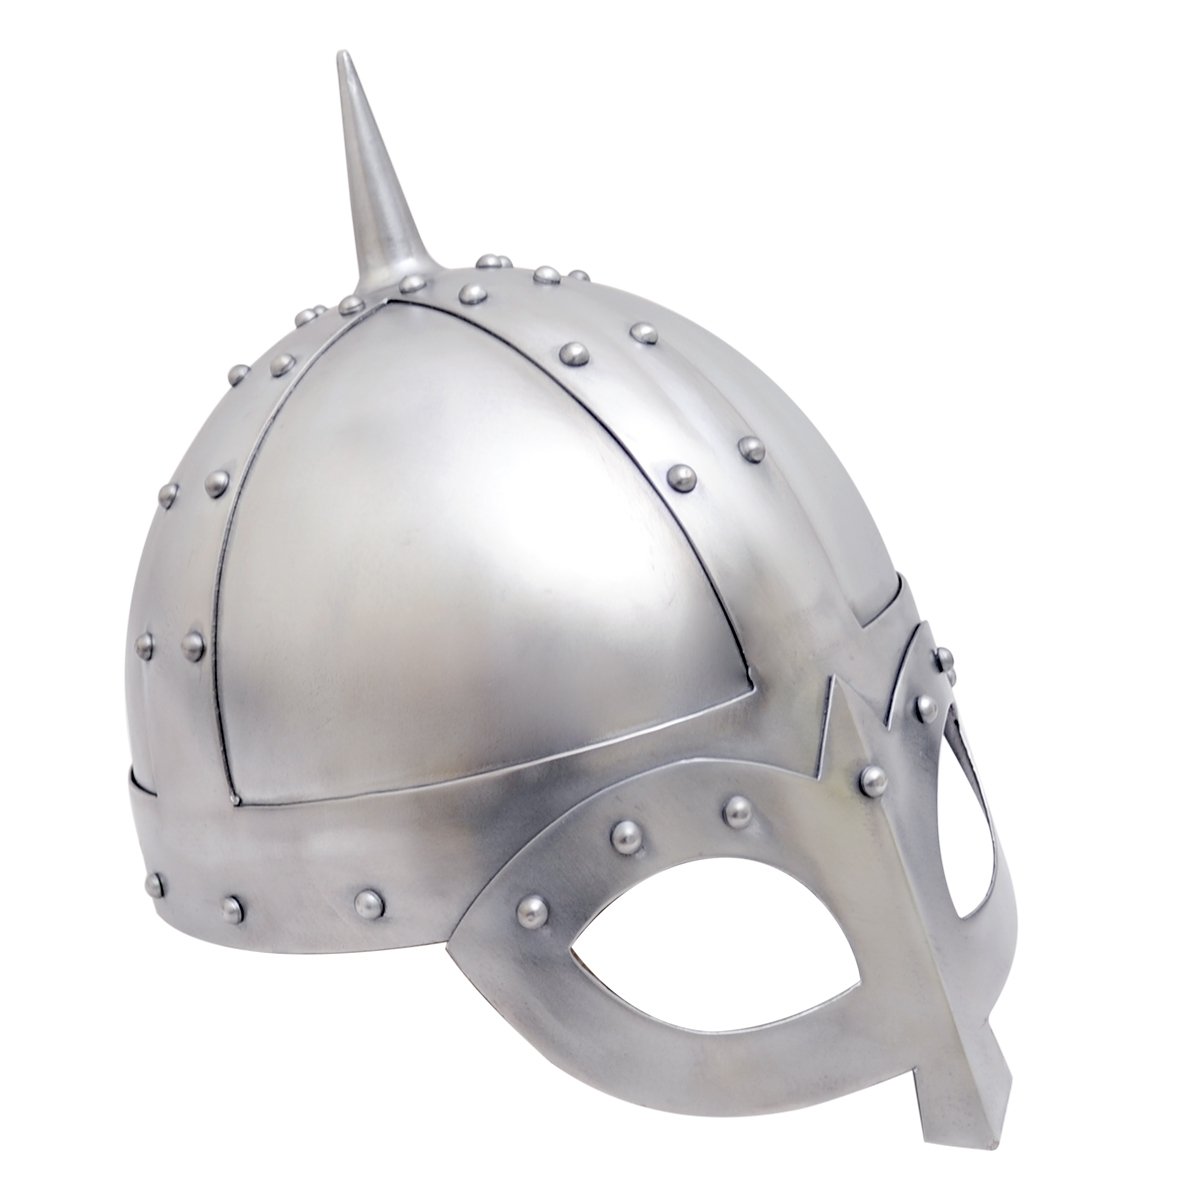 Gjermundbu Helmet - 16 G Iron w/leather liner